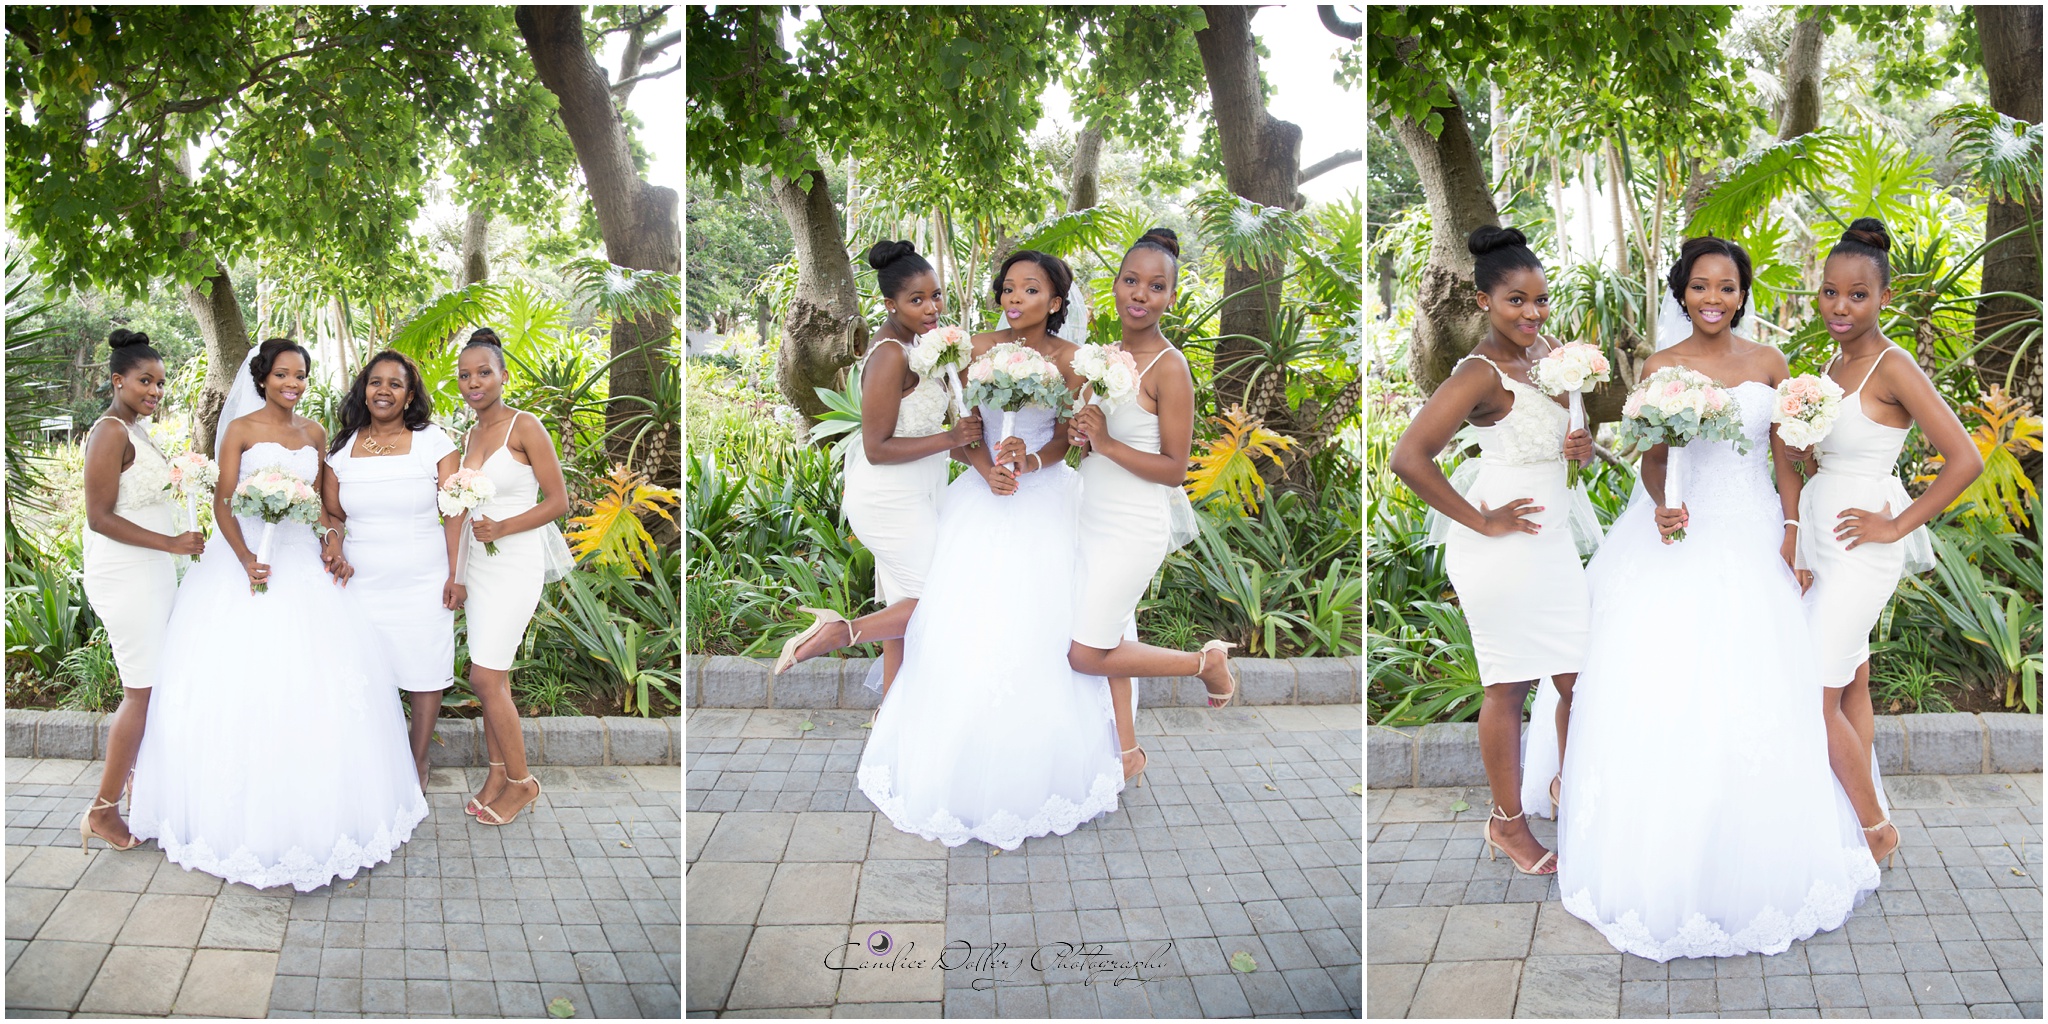 Asanda & Bonga's Wedding - Candice Dollery Photography_8217